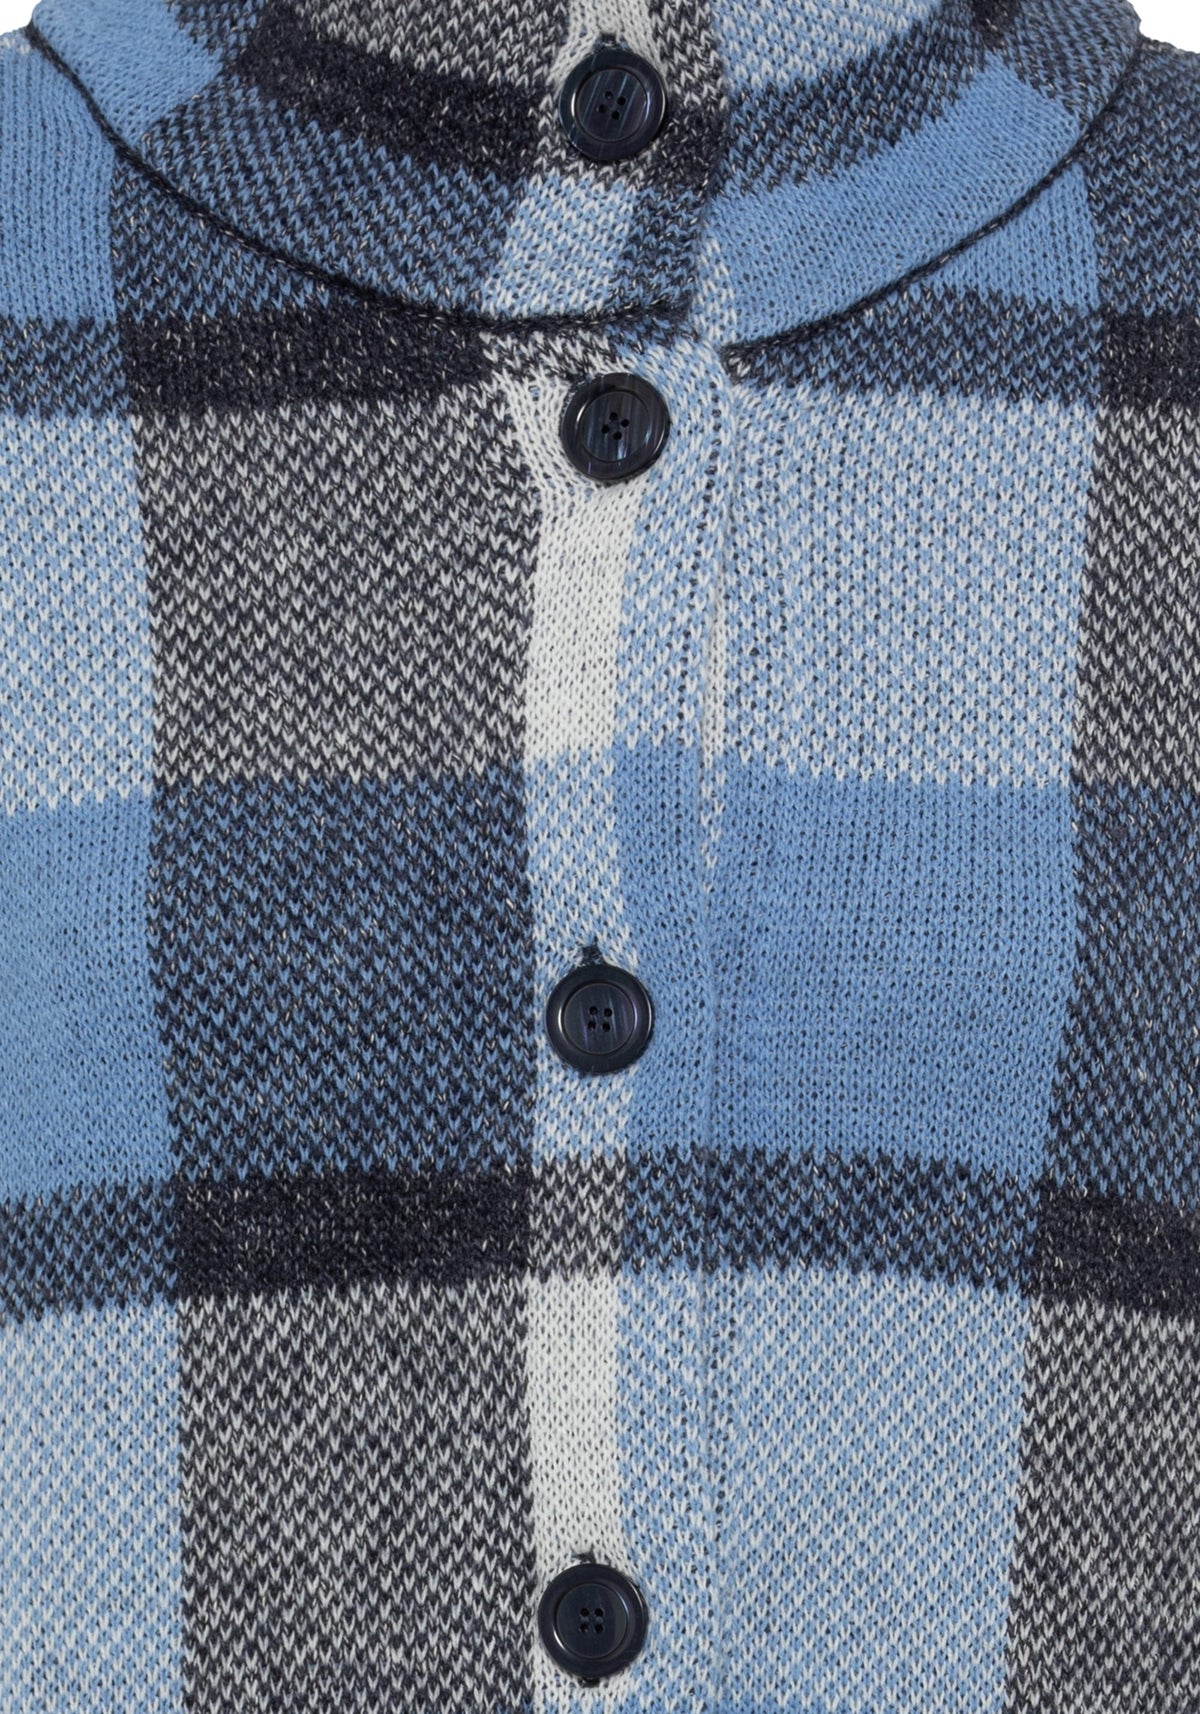 Long Sleeve Longline Plaid Sweater Cardigan